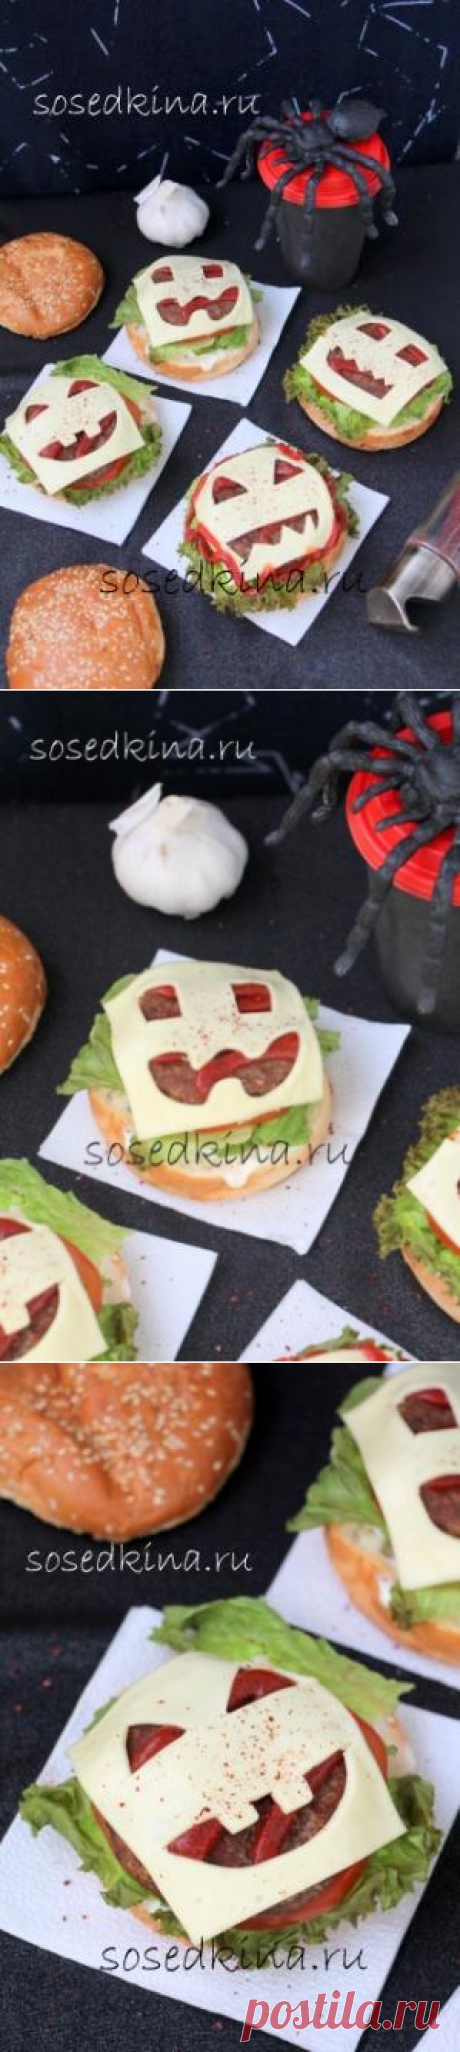 Гамбургеры на Хеллоуин. 

СОСТАВ:
Булочки для гамбургеров
Сыр пластинами
Листья салата
Помидор
Котлеты
Майонез
Кетчуп